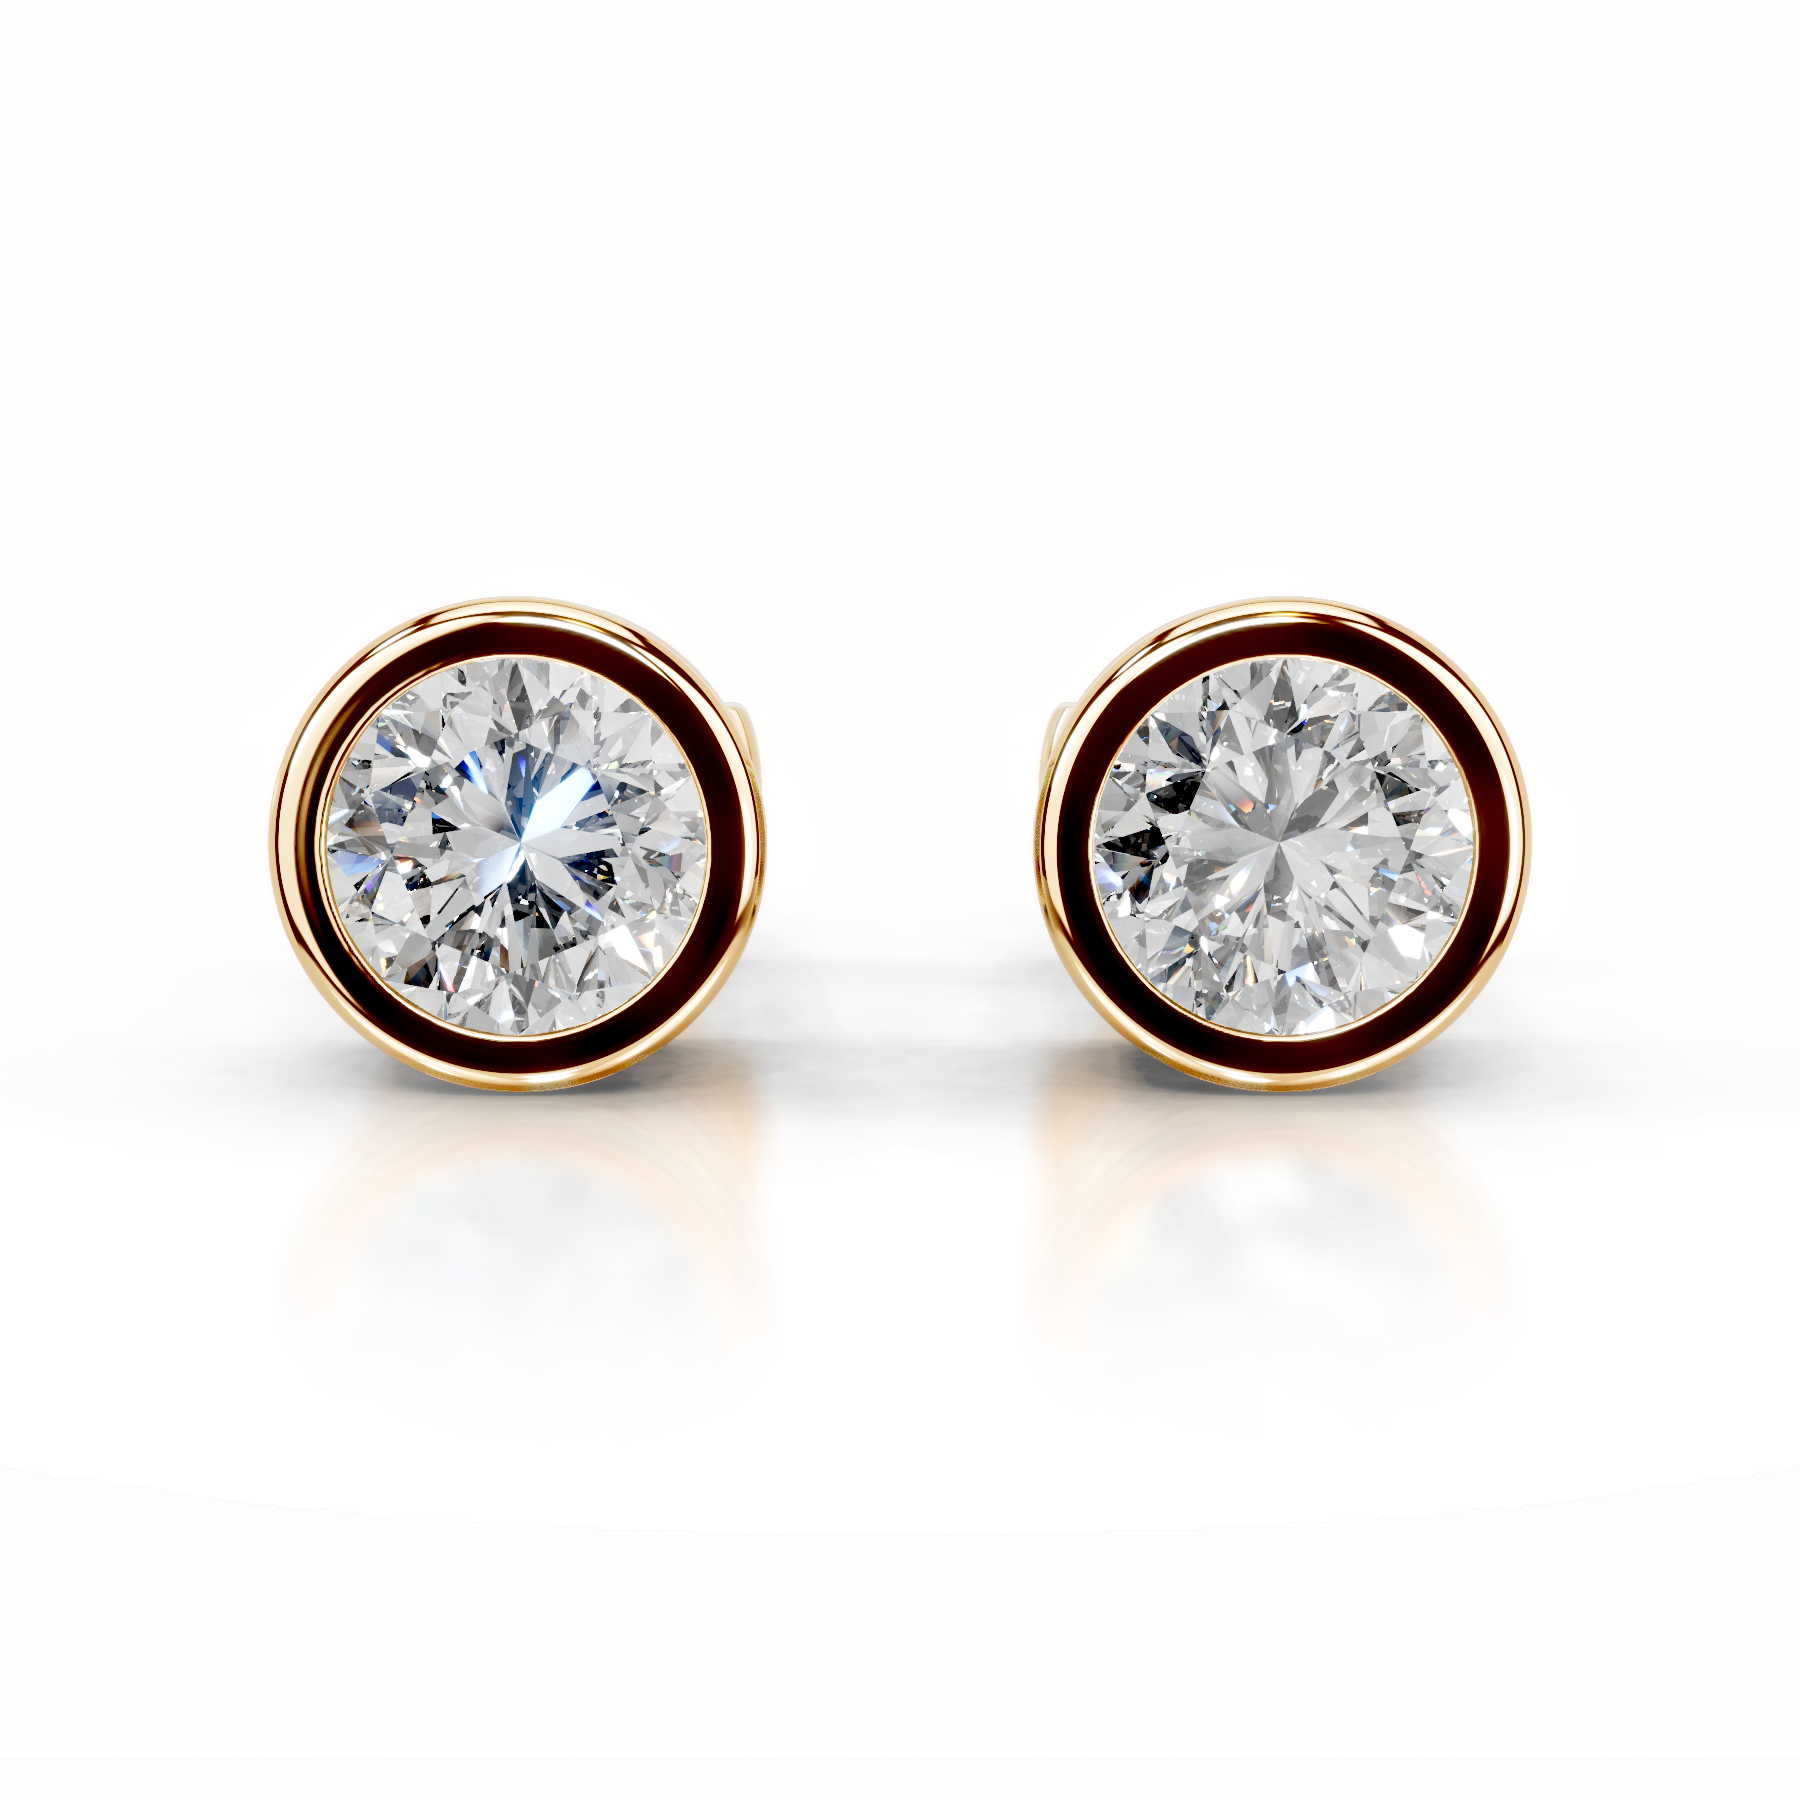 Amber Diamond Earrings   (3 Carat) -18K Yellow Gold